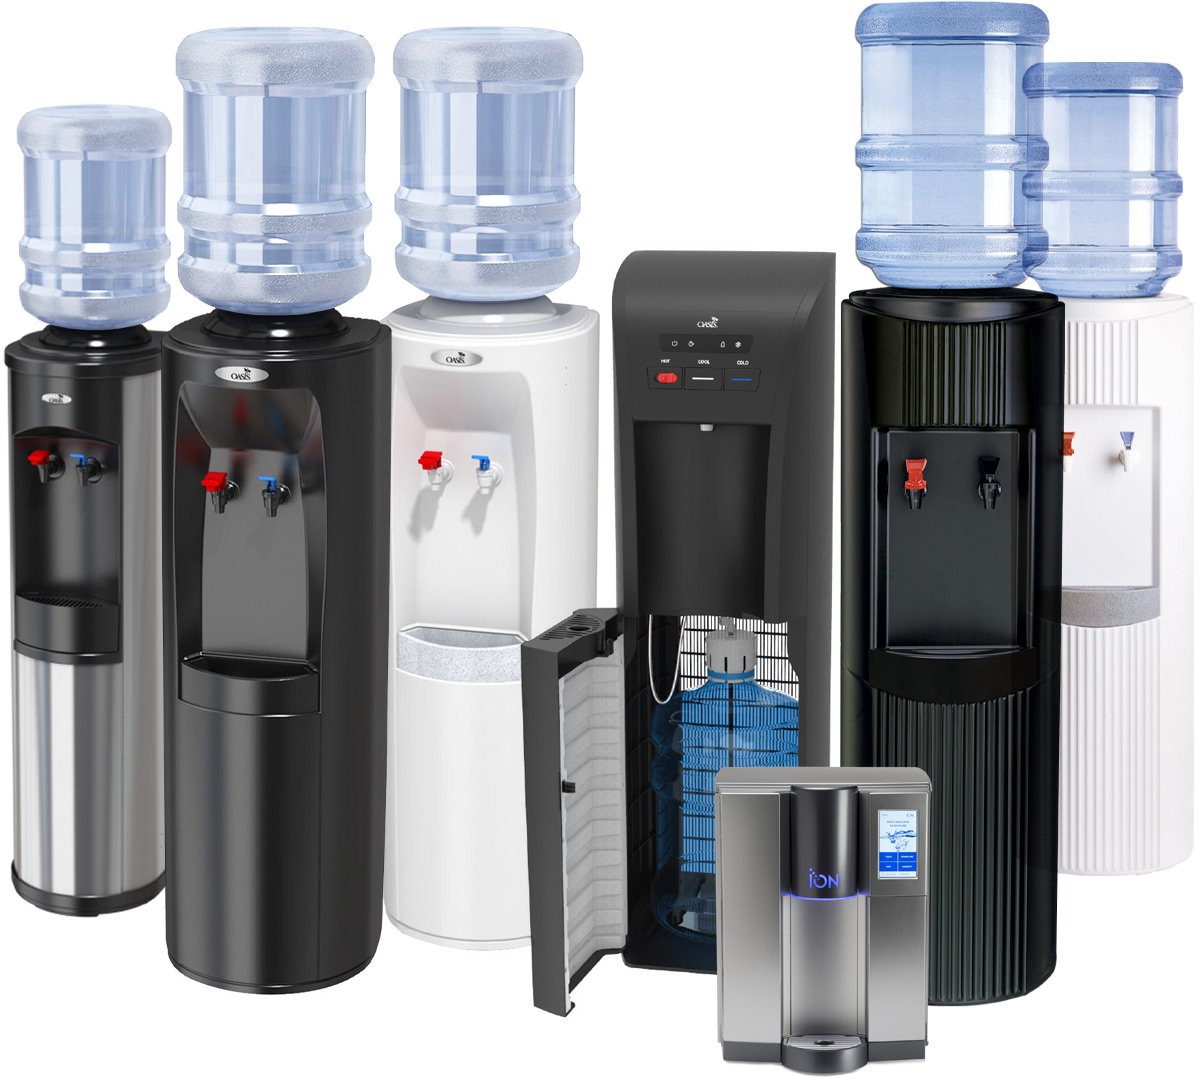 Water Bottles - 30 oz, 4 Designs, Counter Display